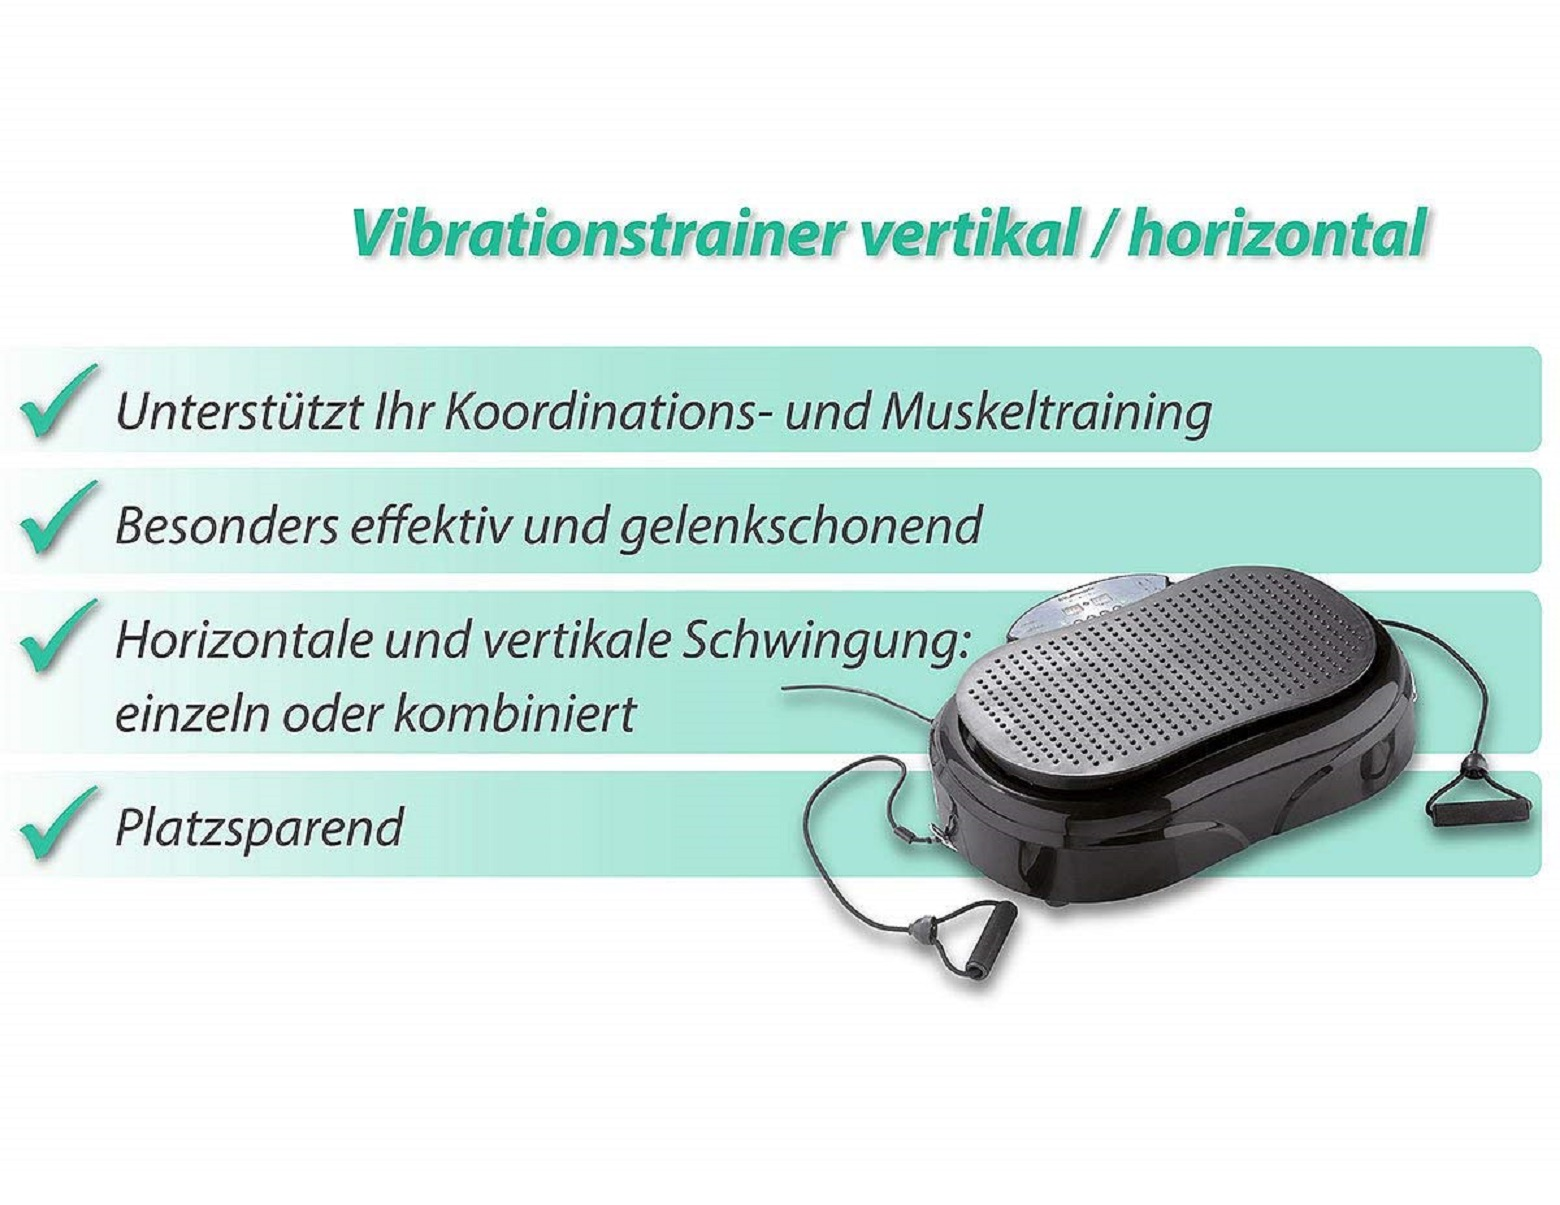 Vibrationsplatte NEWGEN mit MEDICALS schwarz Expander Vibrationstrainer,